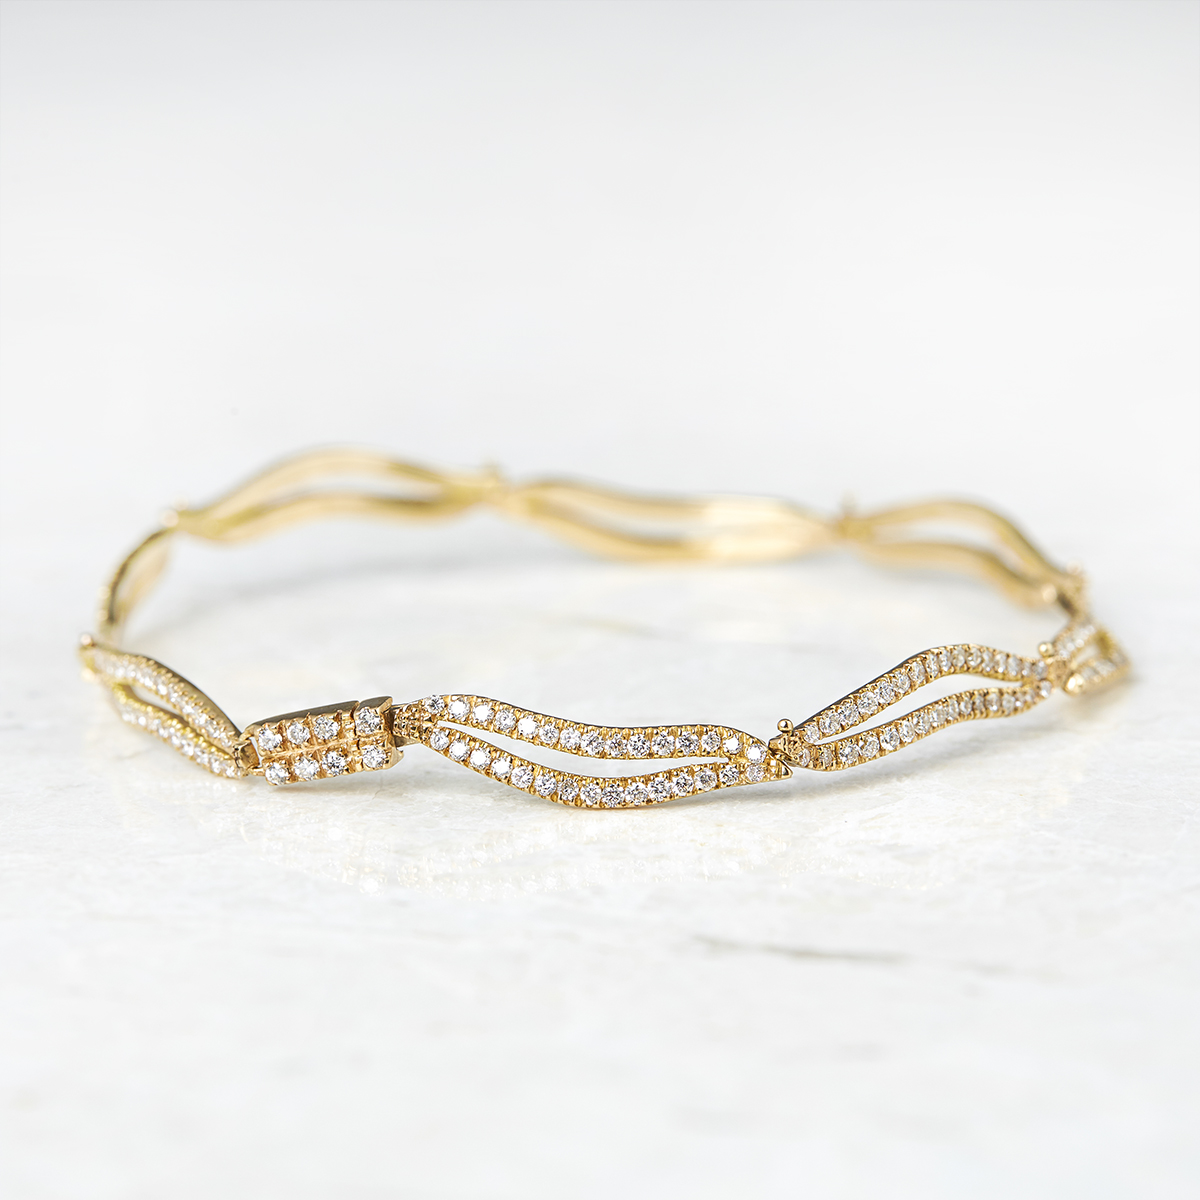 Unbranded 18k Yellow Gold 2.56ct Diamond Wavy Link Bracelet - Image 2 of 6